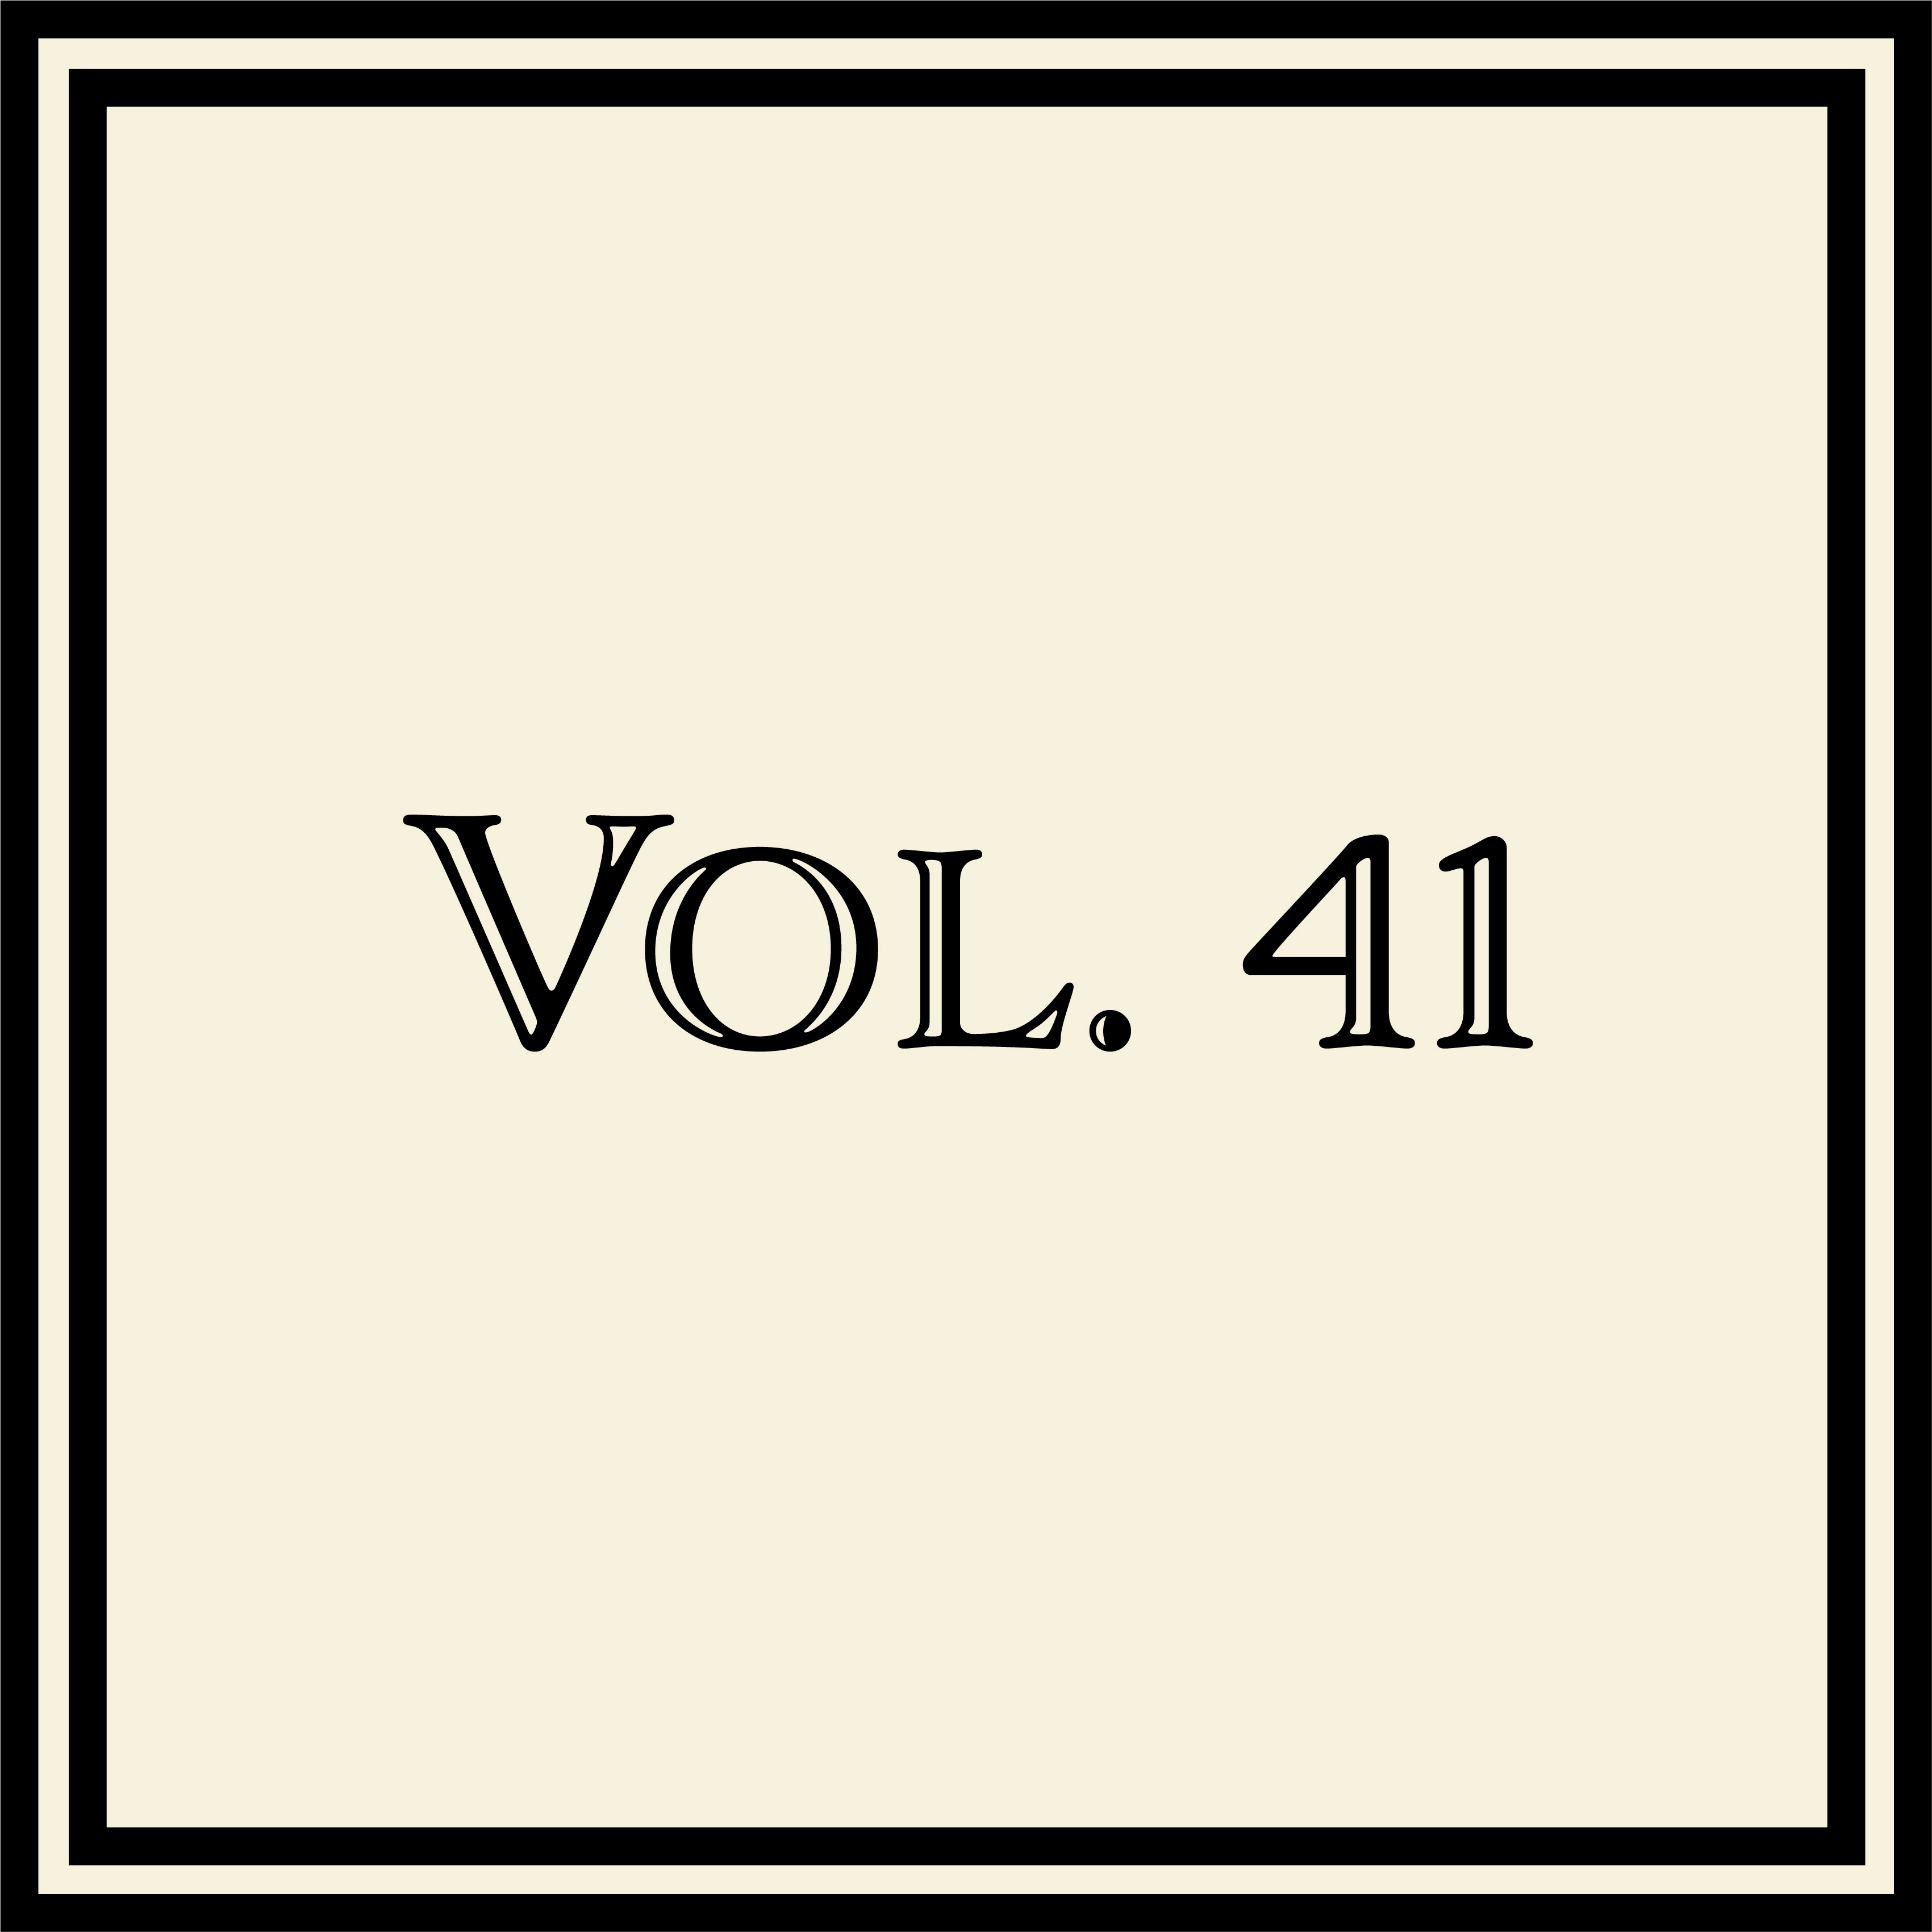 volume 41